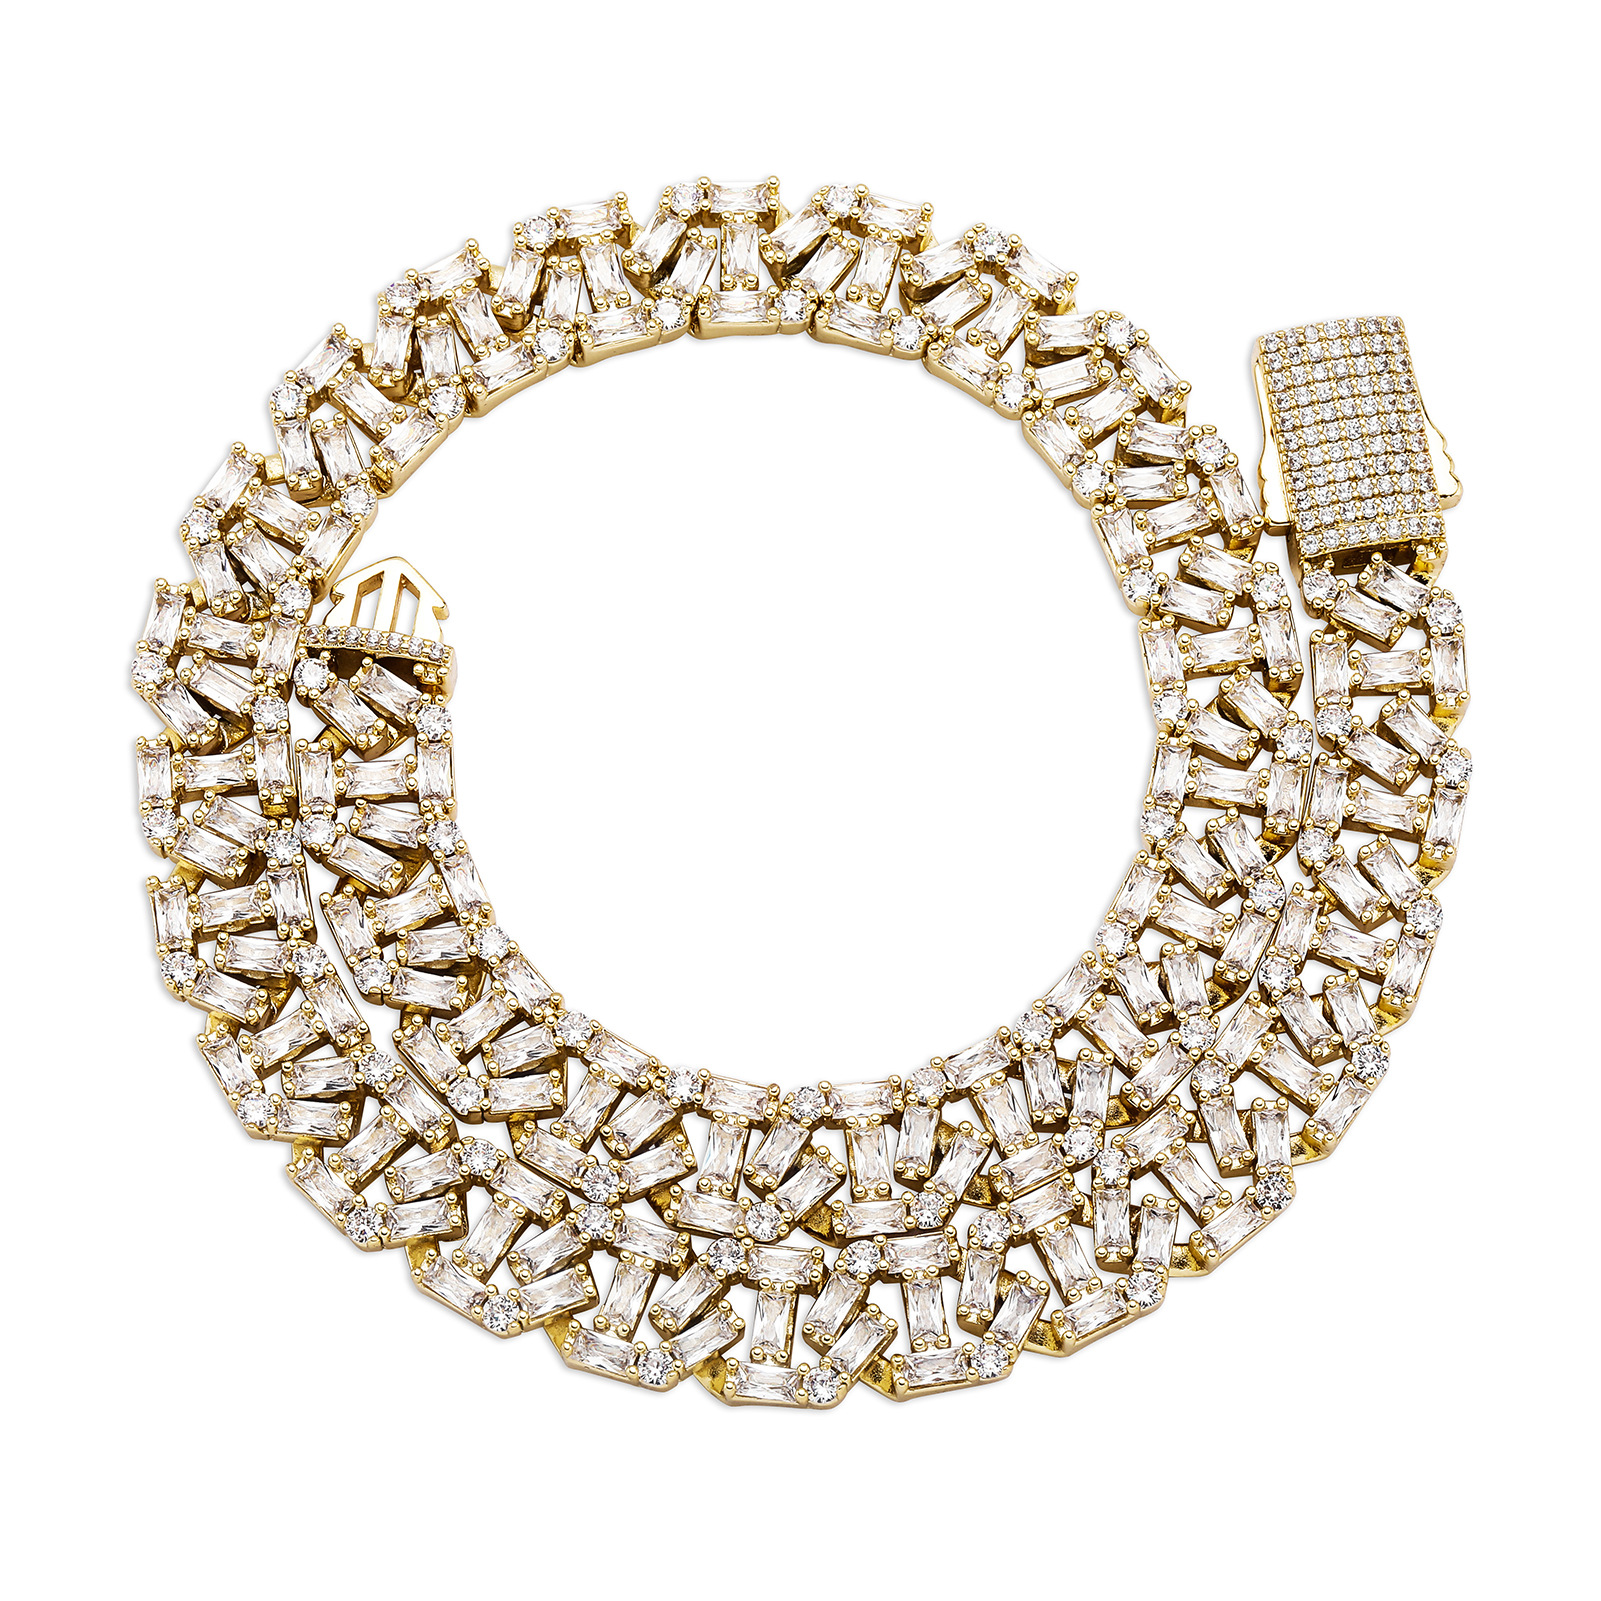 10:Bracelet gold 8 inch